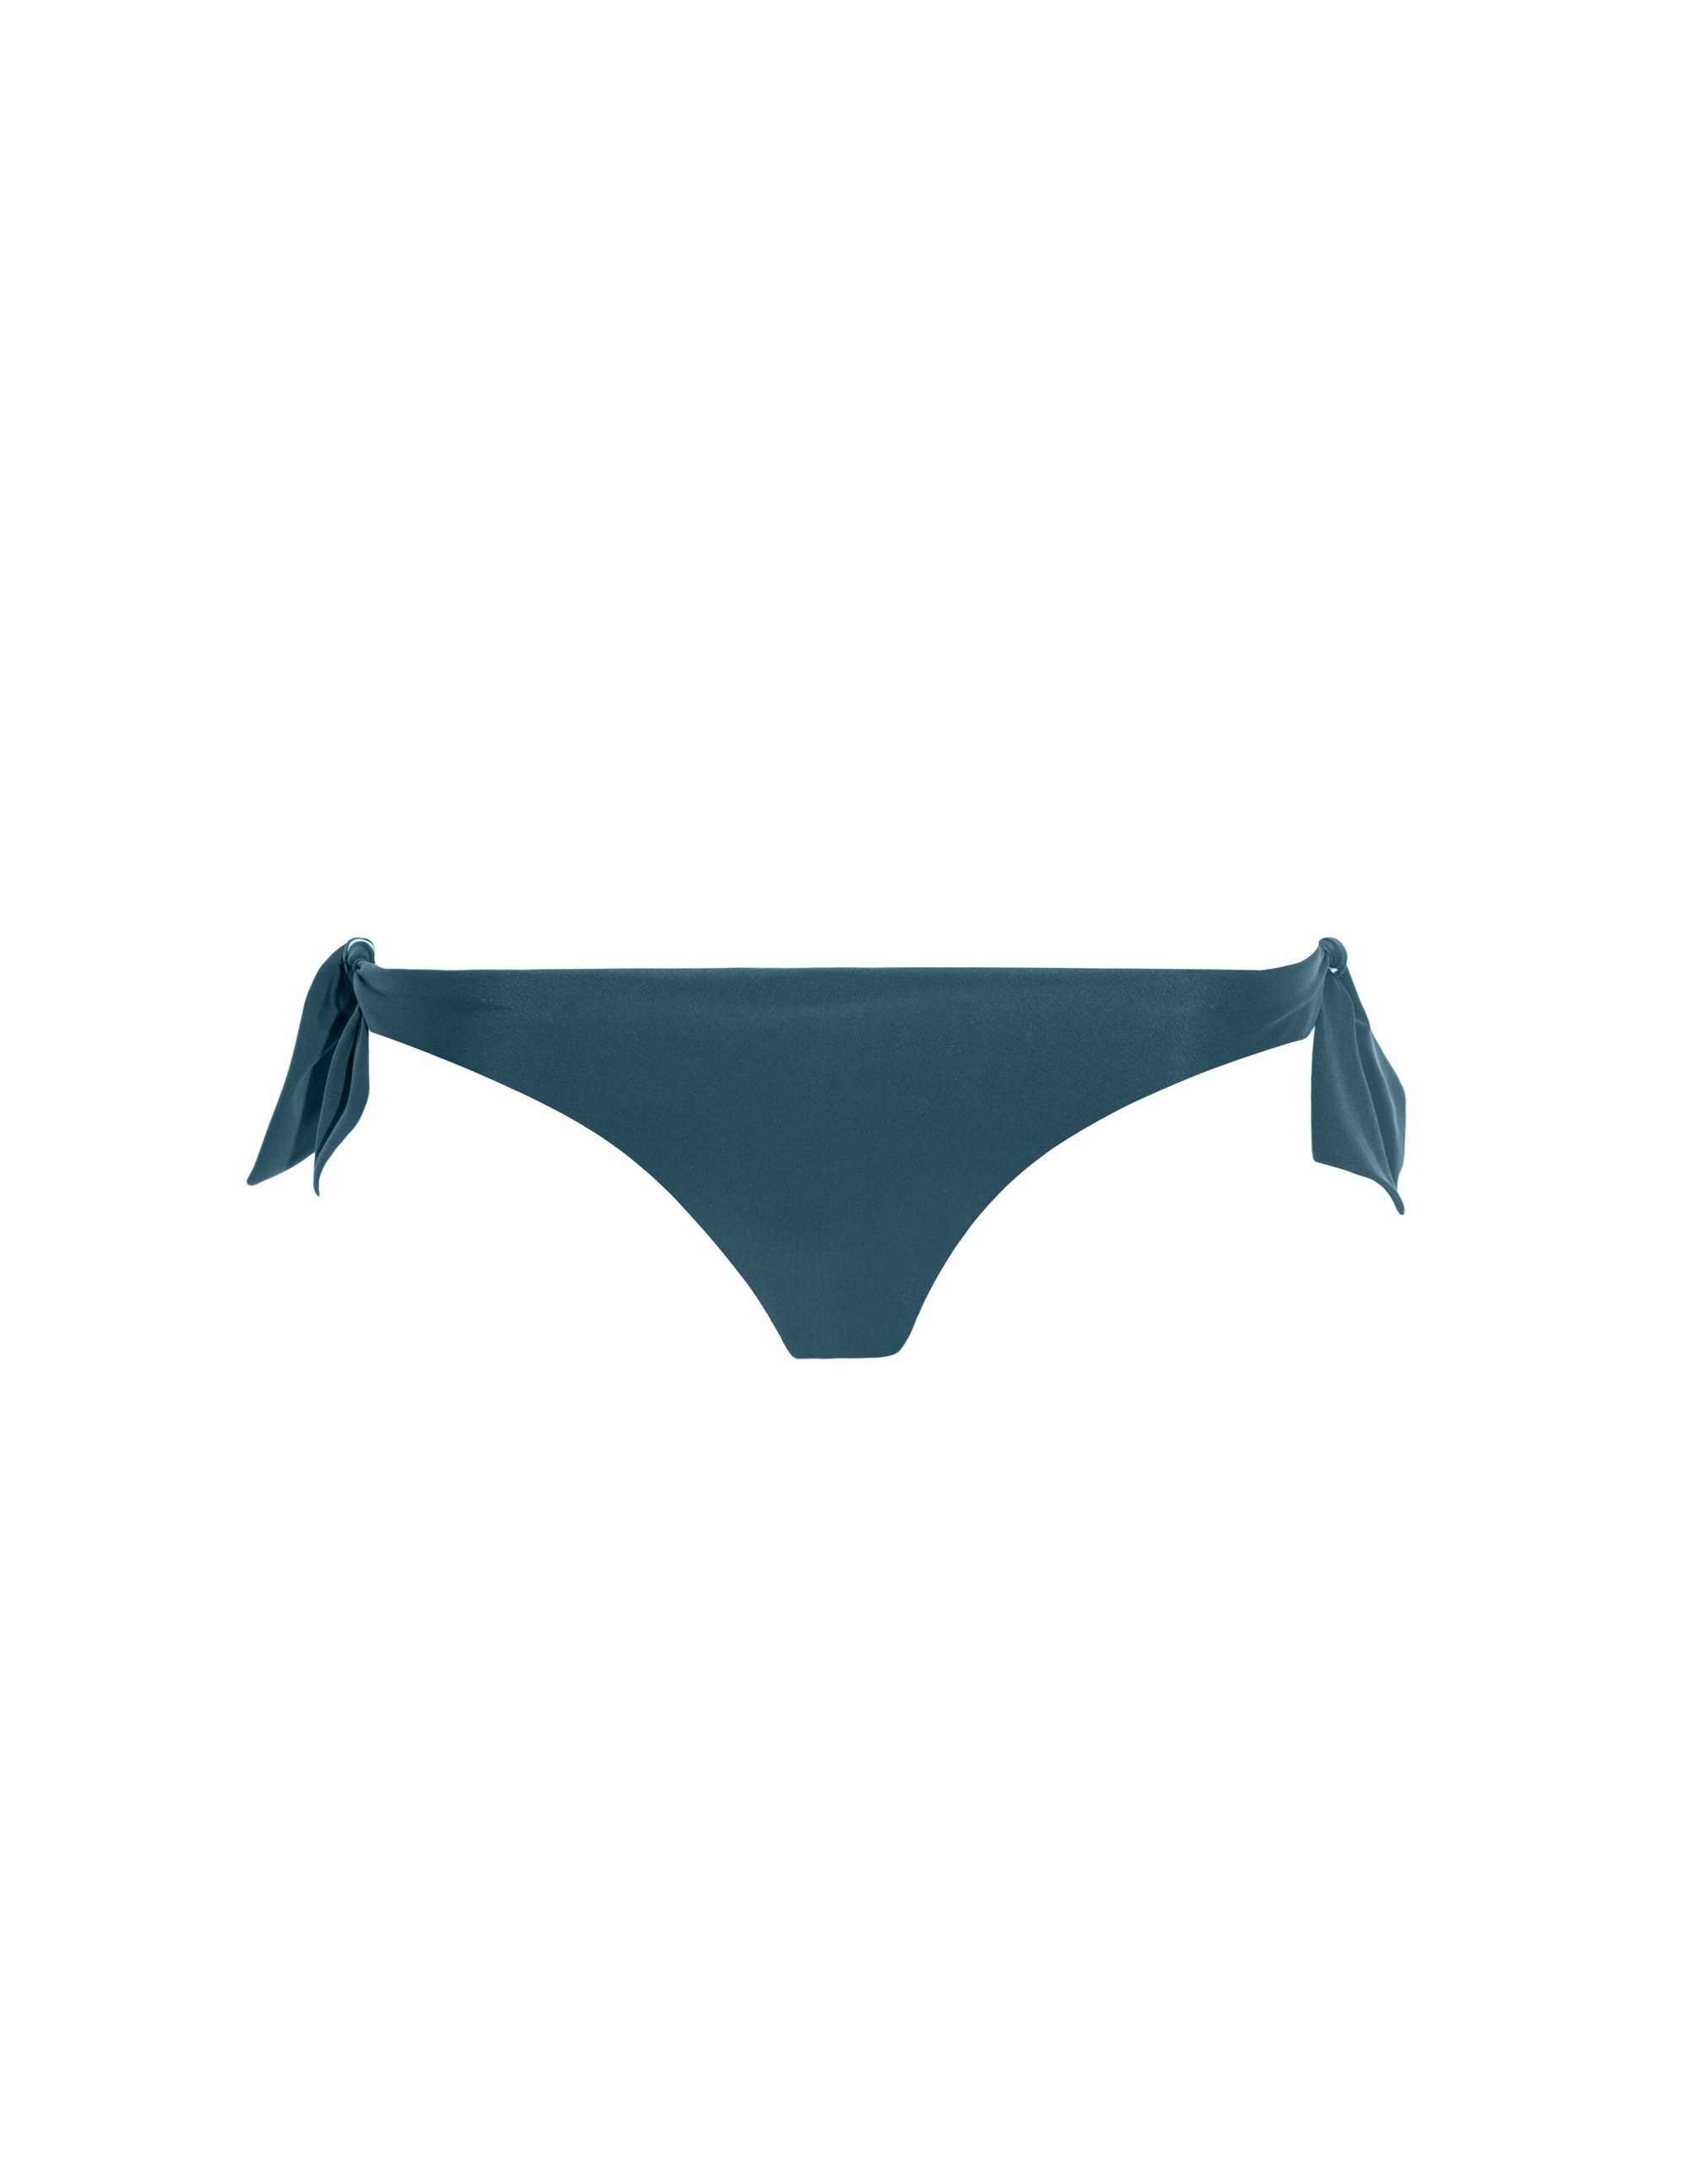 CONTA bikini bottom - DEEP GREEN